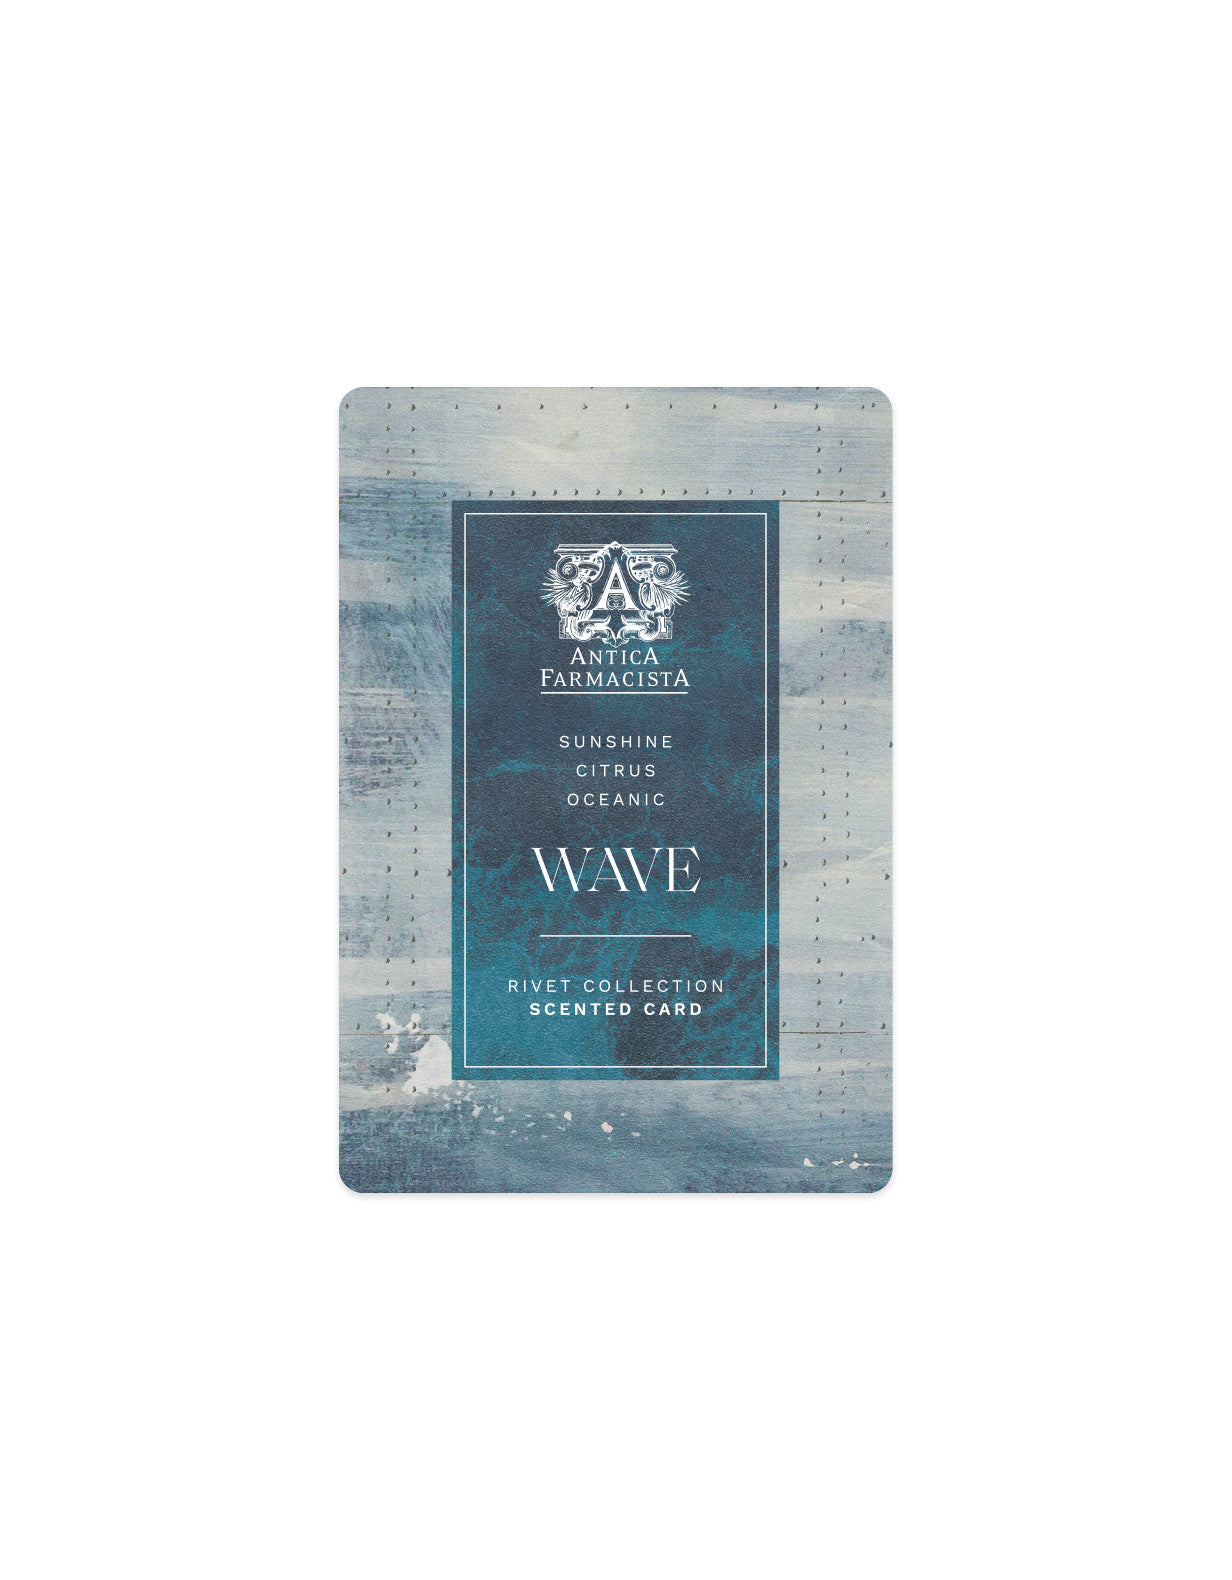 GWP - Scented Card - Wave (Rivet)